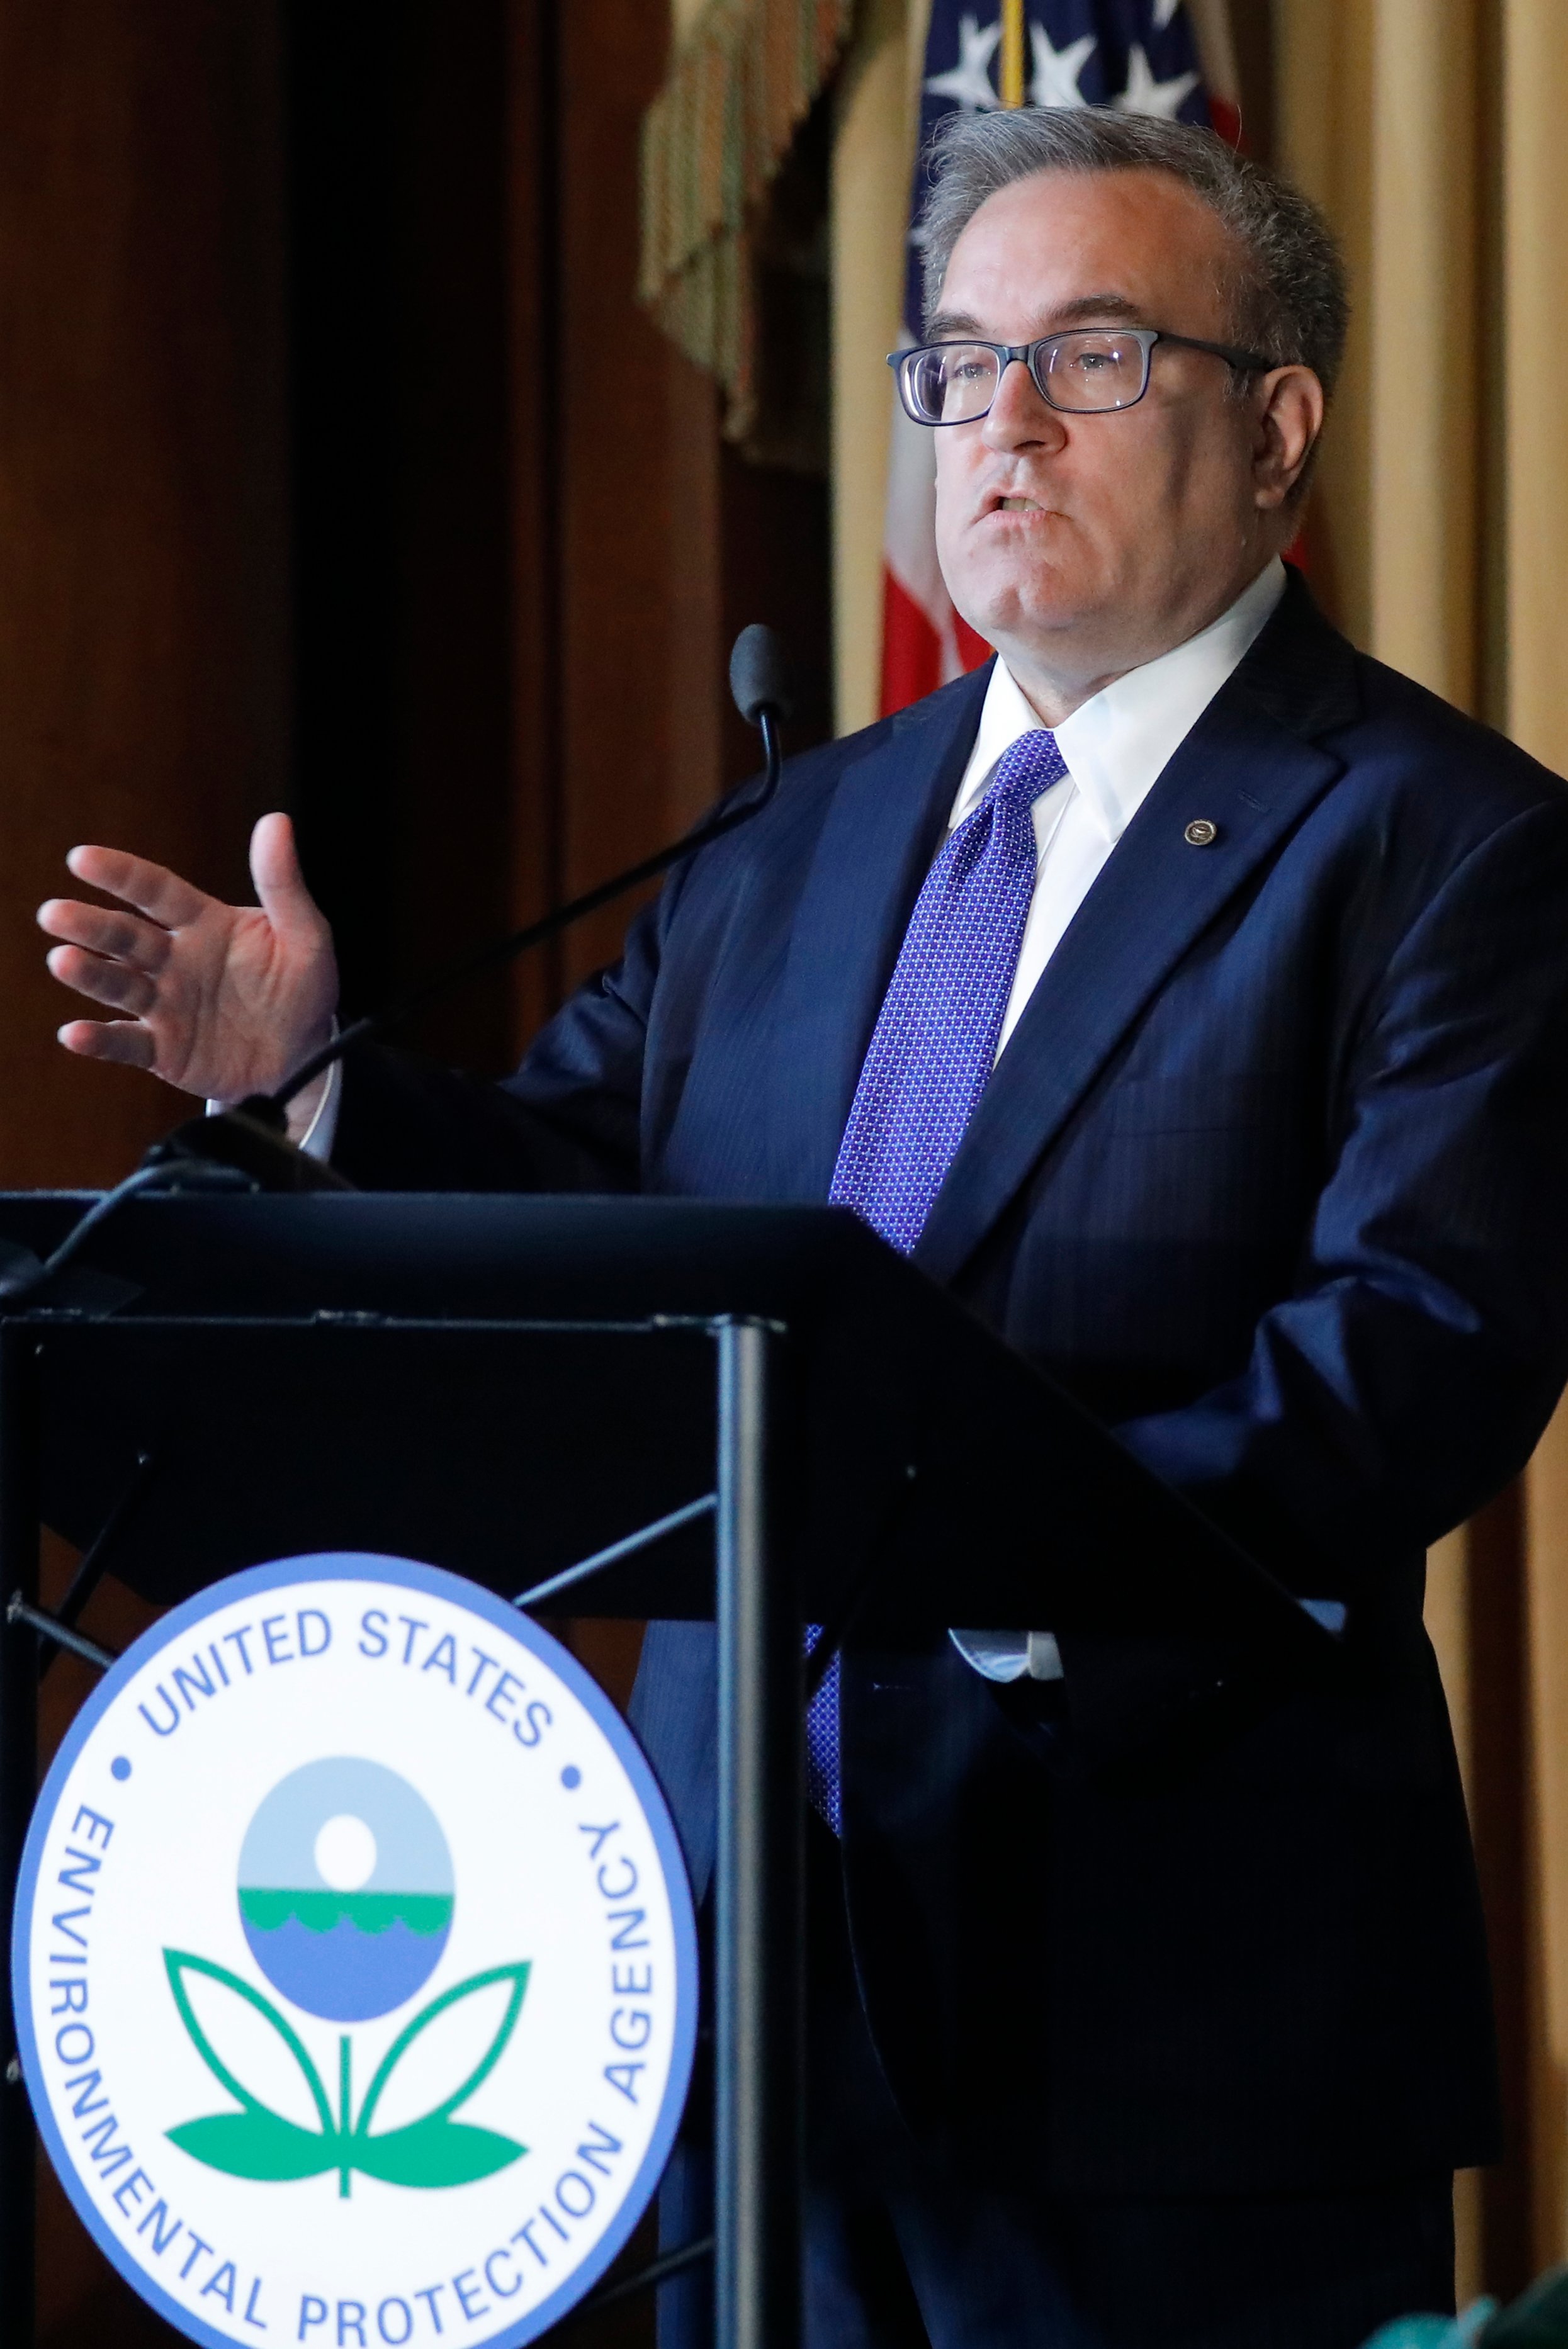 U.S. Environmental Protection Agency (EPA) Acting Administrator Andrew Wheeler addresses EPA staff at EPA headquarters in Washington, U.S., July 11, 2018. REUTERS/Ting Shen